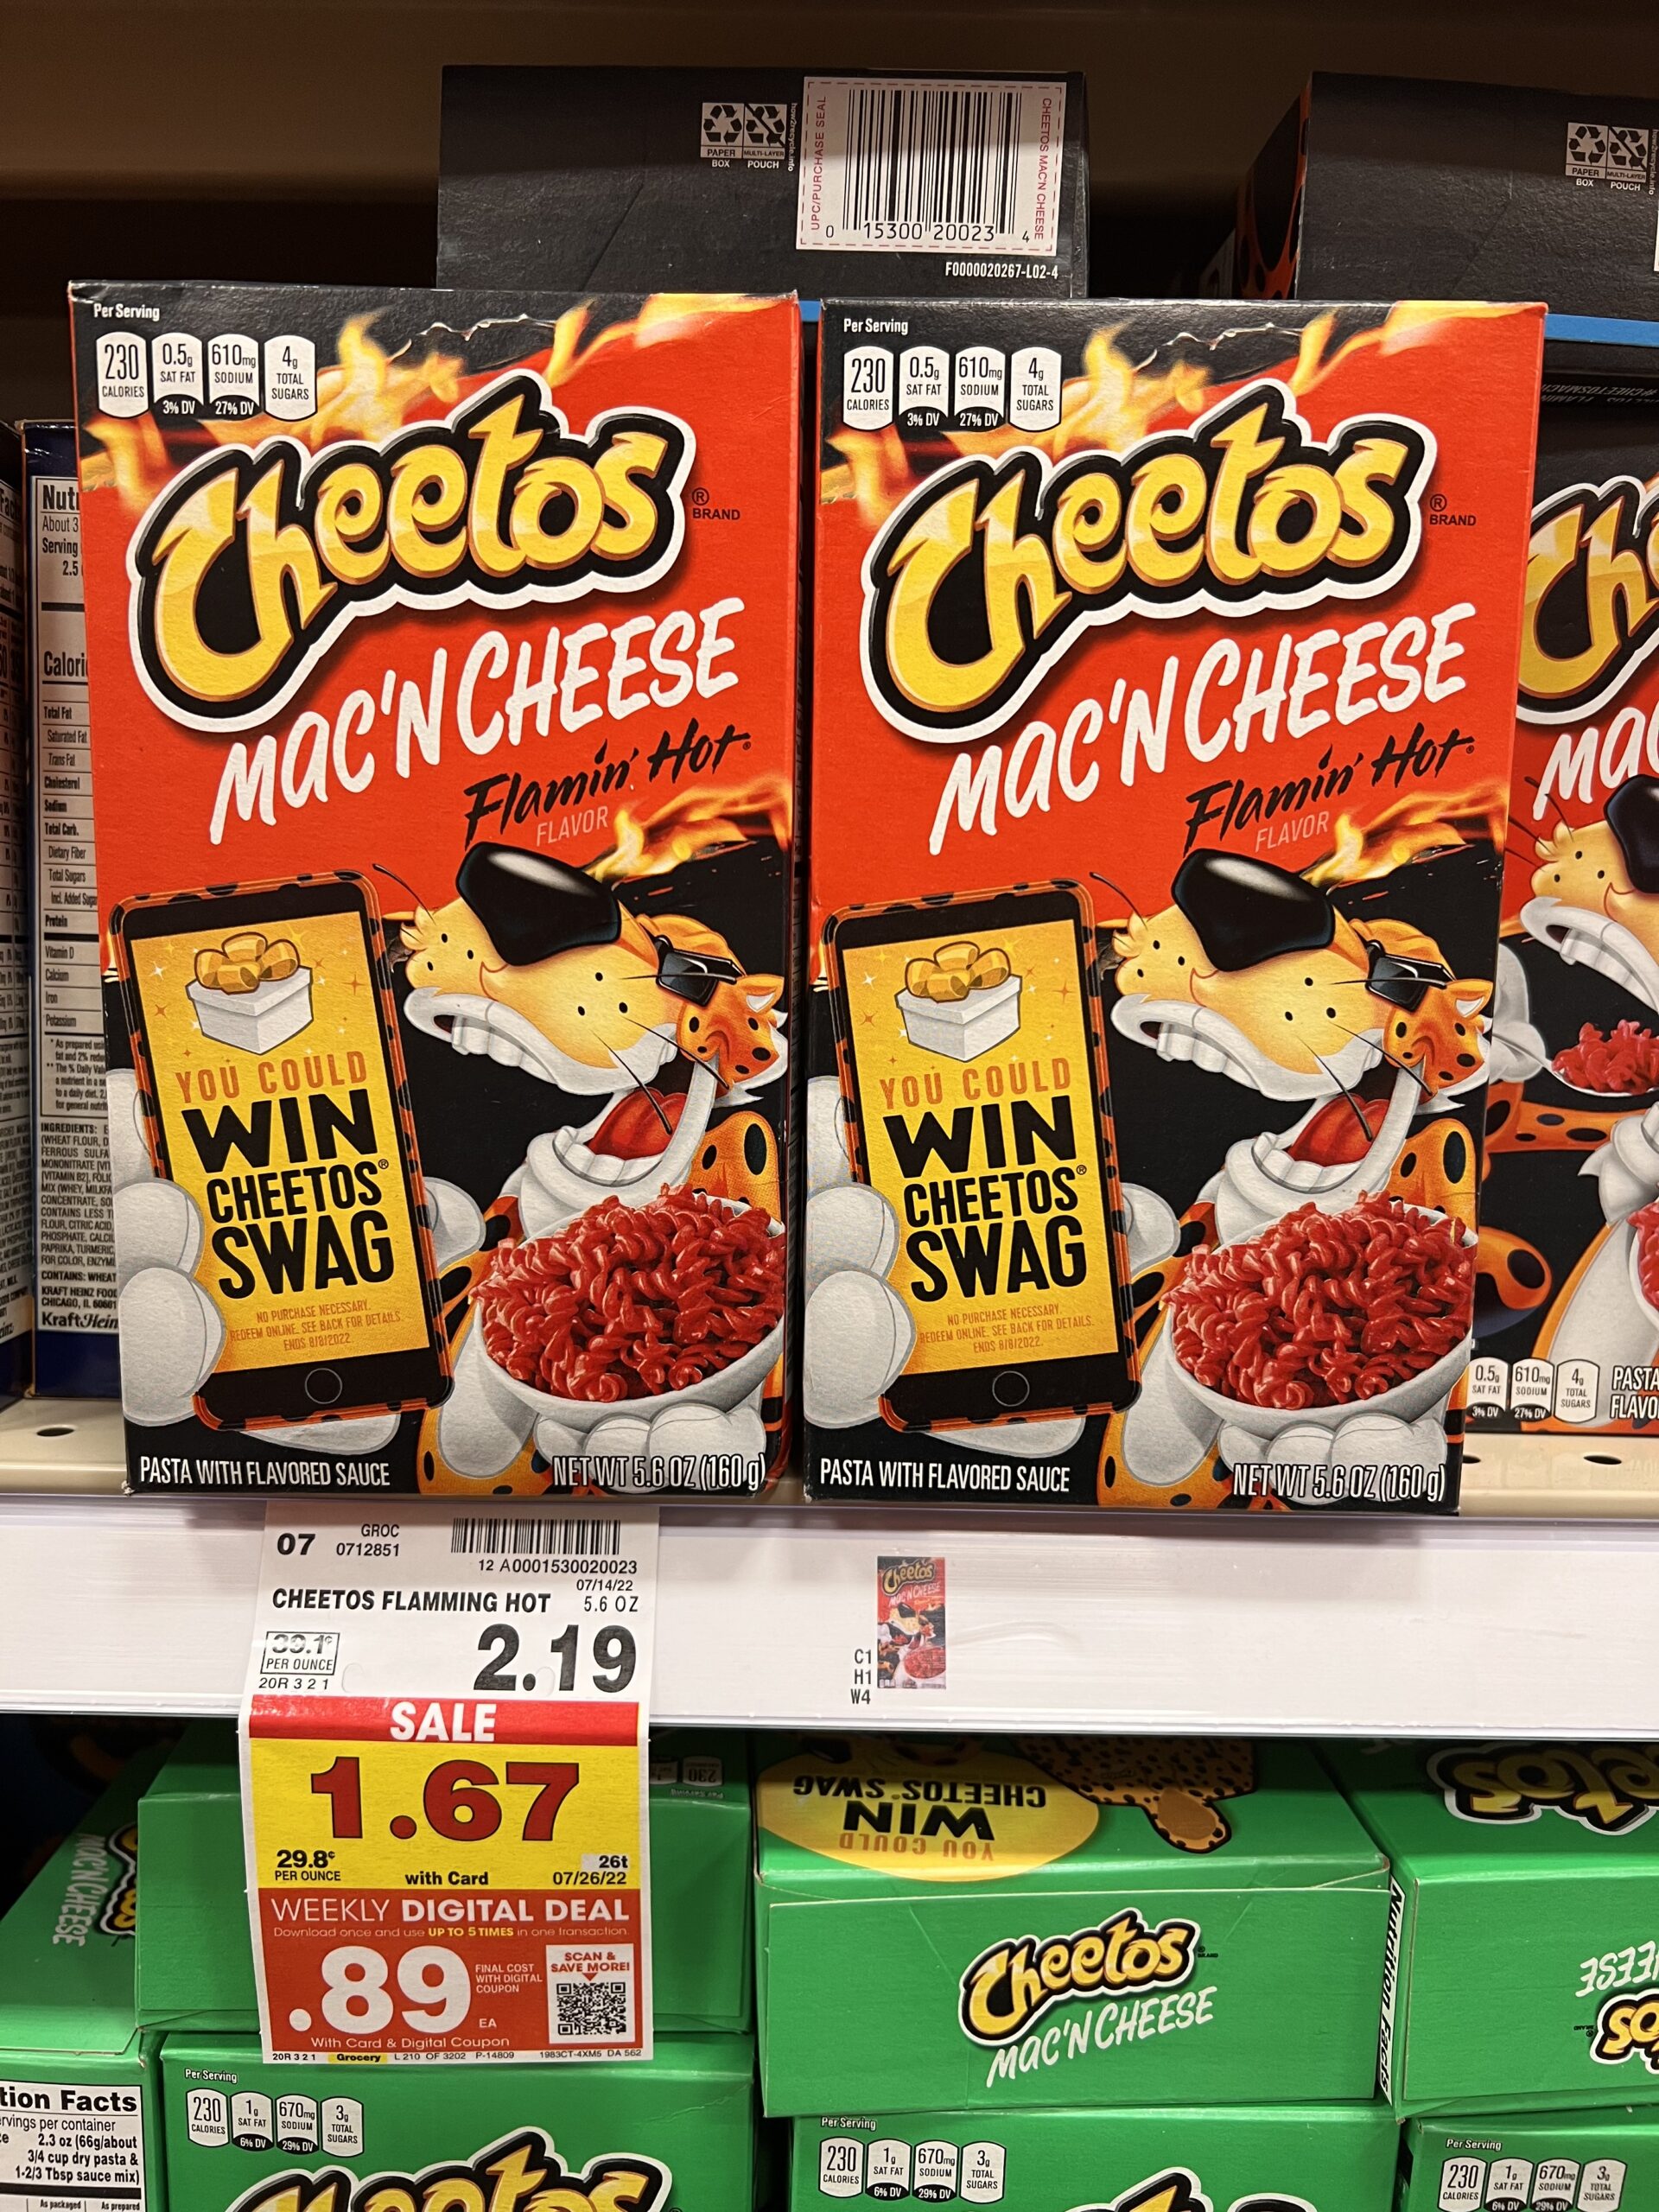 Cheetos Mac N Cheese on Kroger Shelf